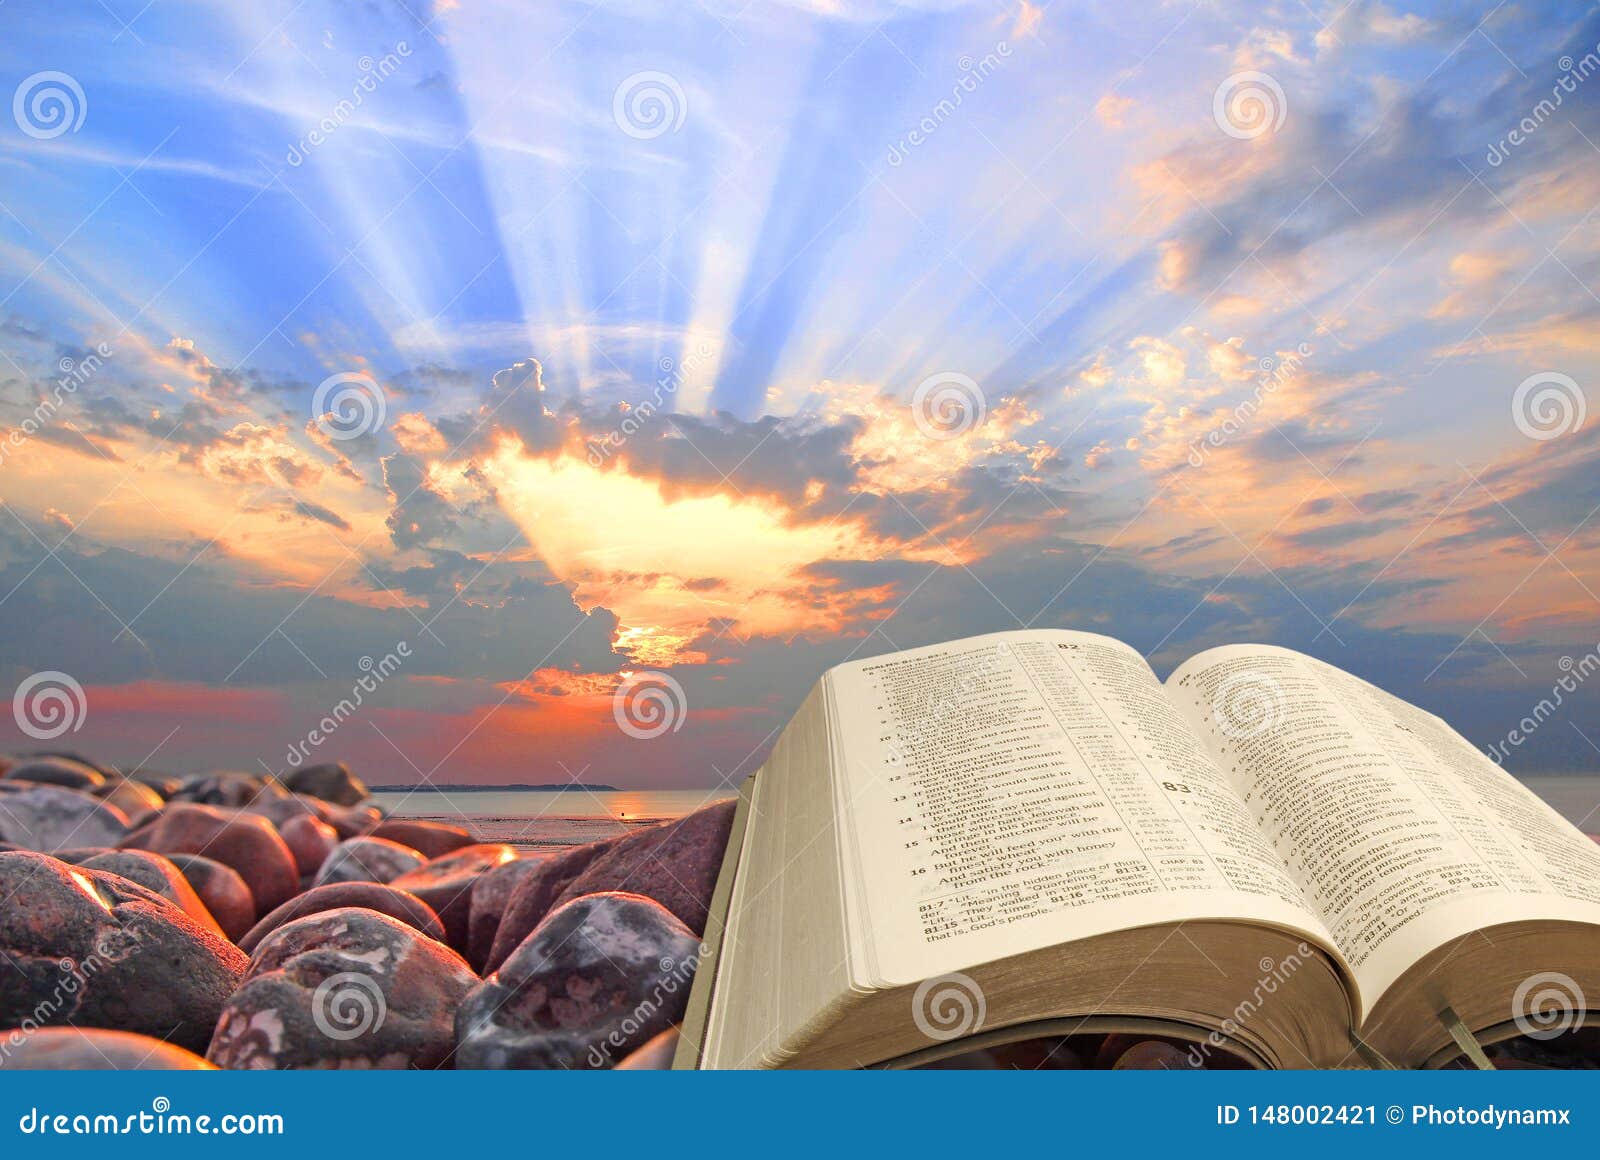 divine bible spiritual light sun rays heaven sky god jesus miracles paradise